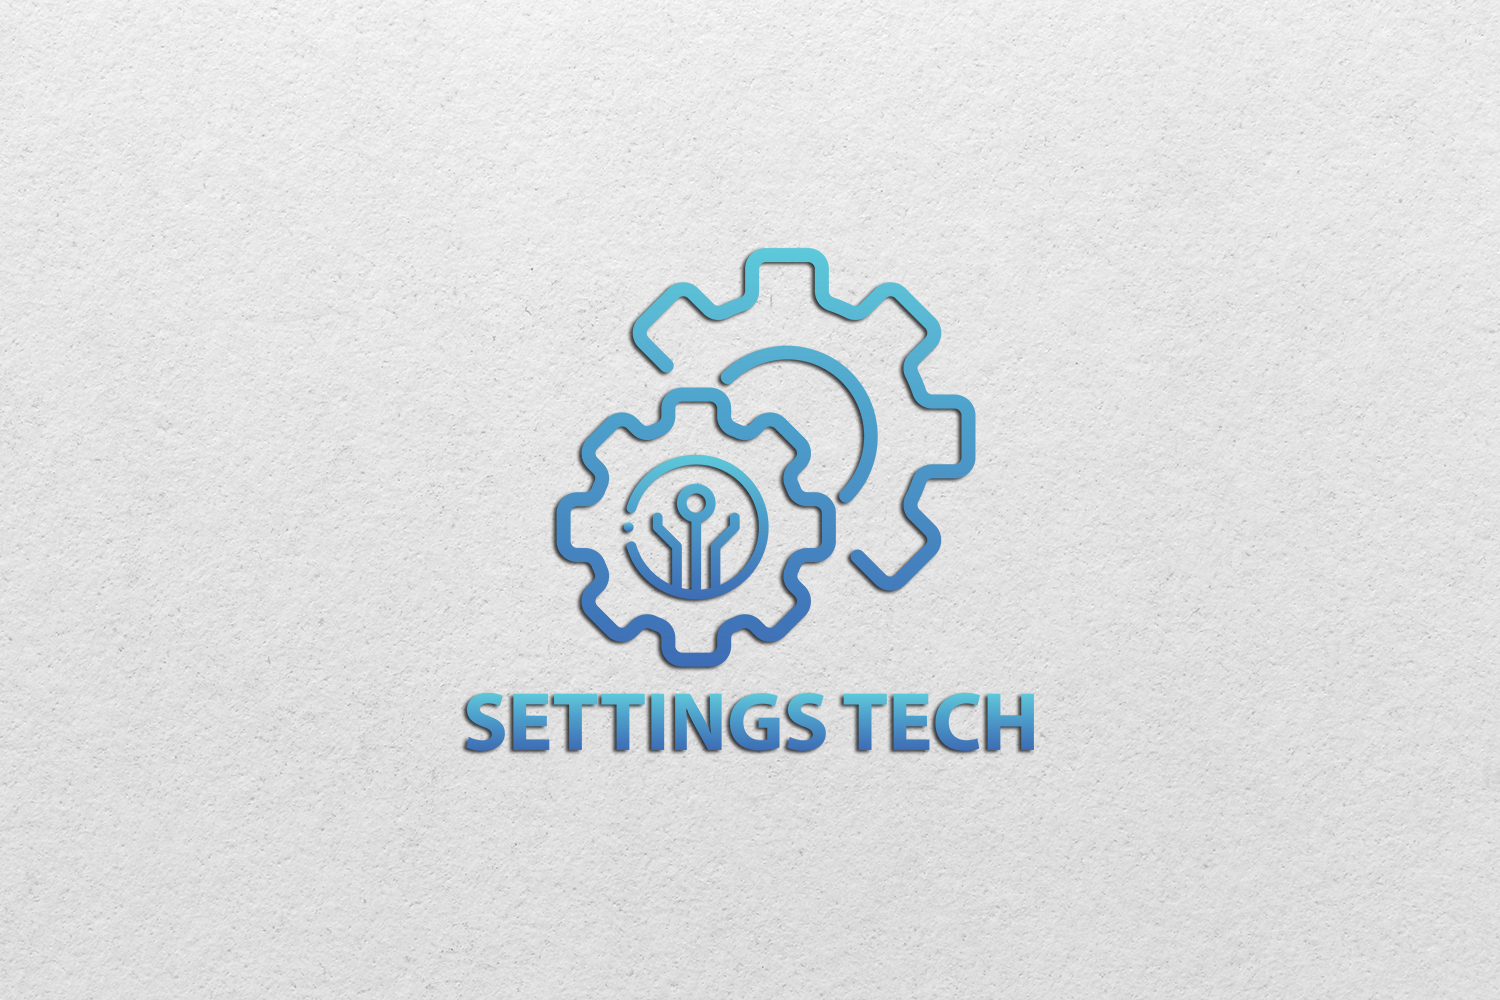 Settings Tech Logo Design